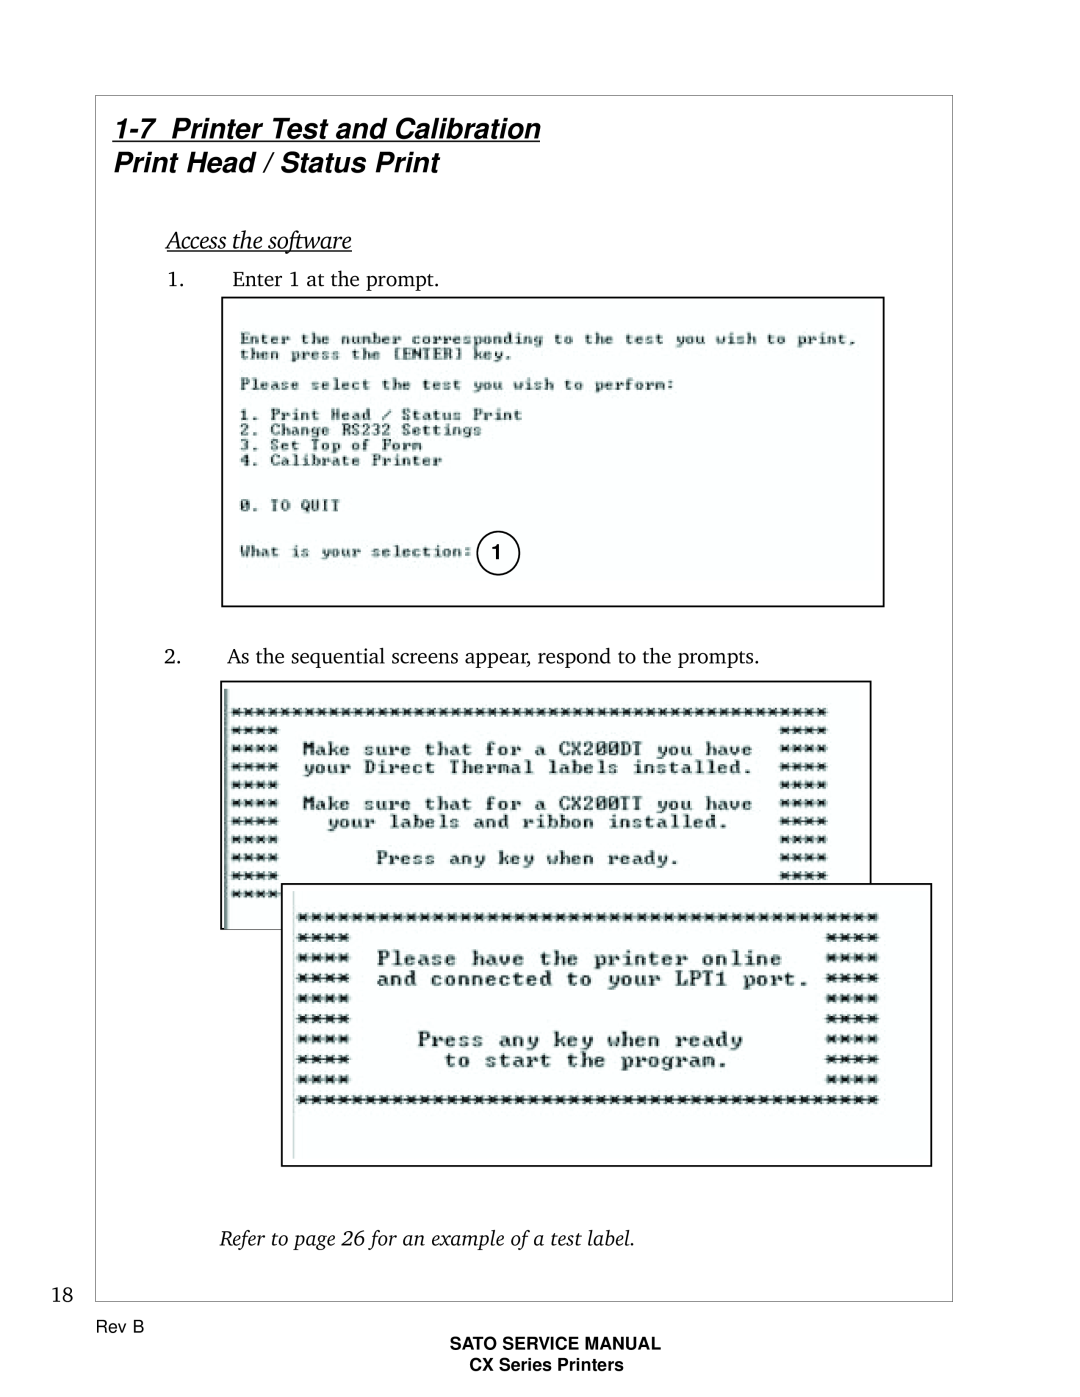 SATO CX200 manual Printer Test and Calibration Print Head / Status Print, Access the software, Rev B 